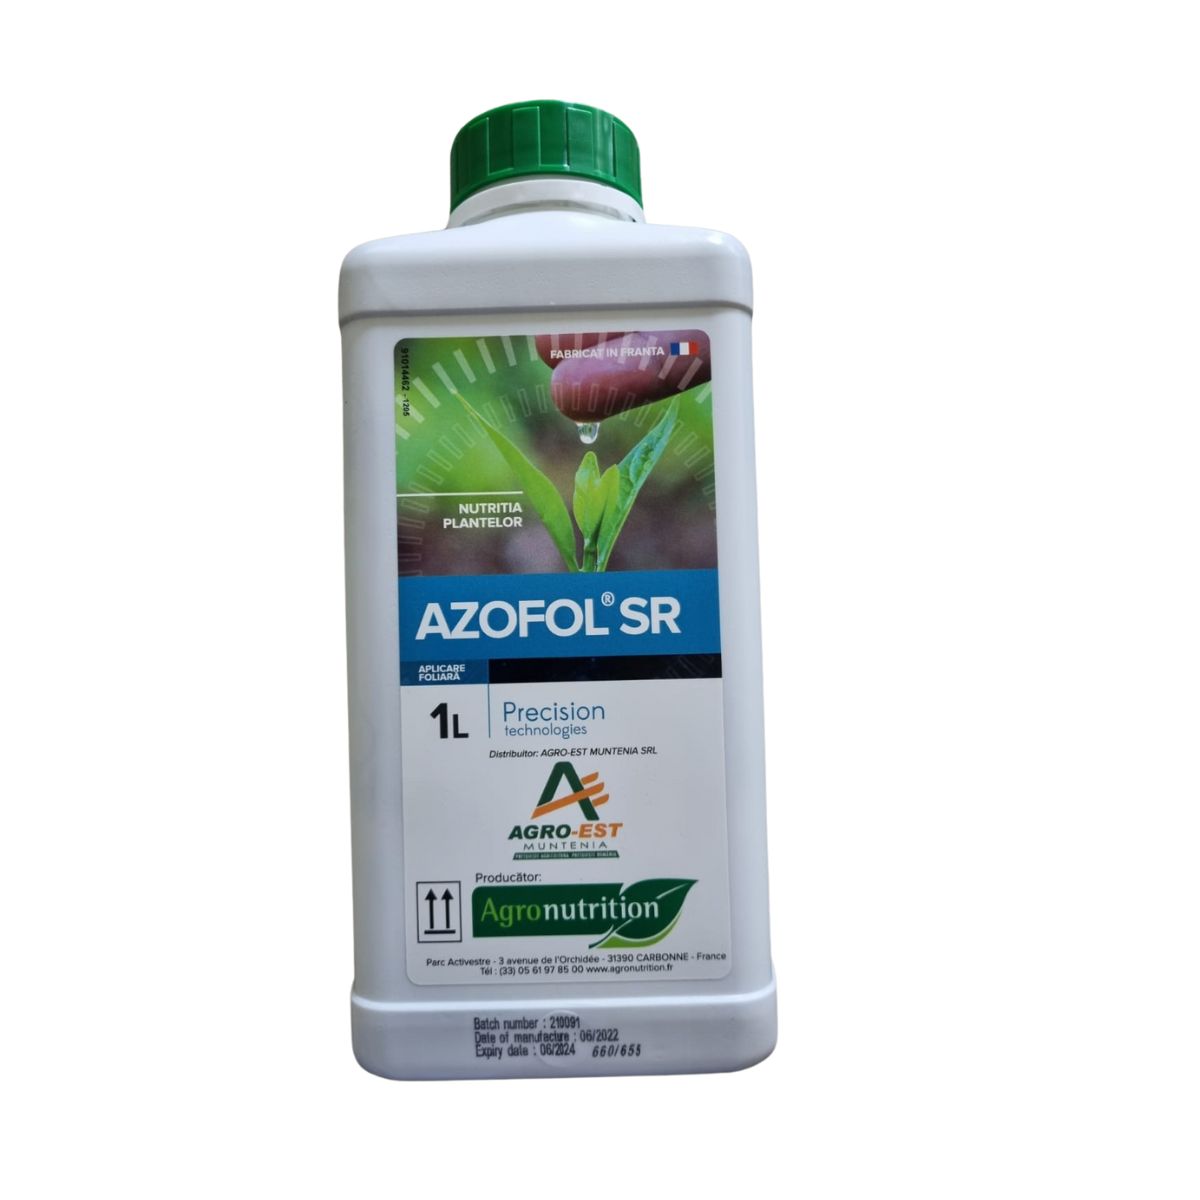 Azot cu eliberare lenta - Fertilizant azot cu eliberare lenta 36% si microelemente Azofol SR, 1 LITRU, hectarul.ro